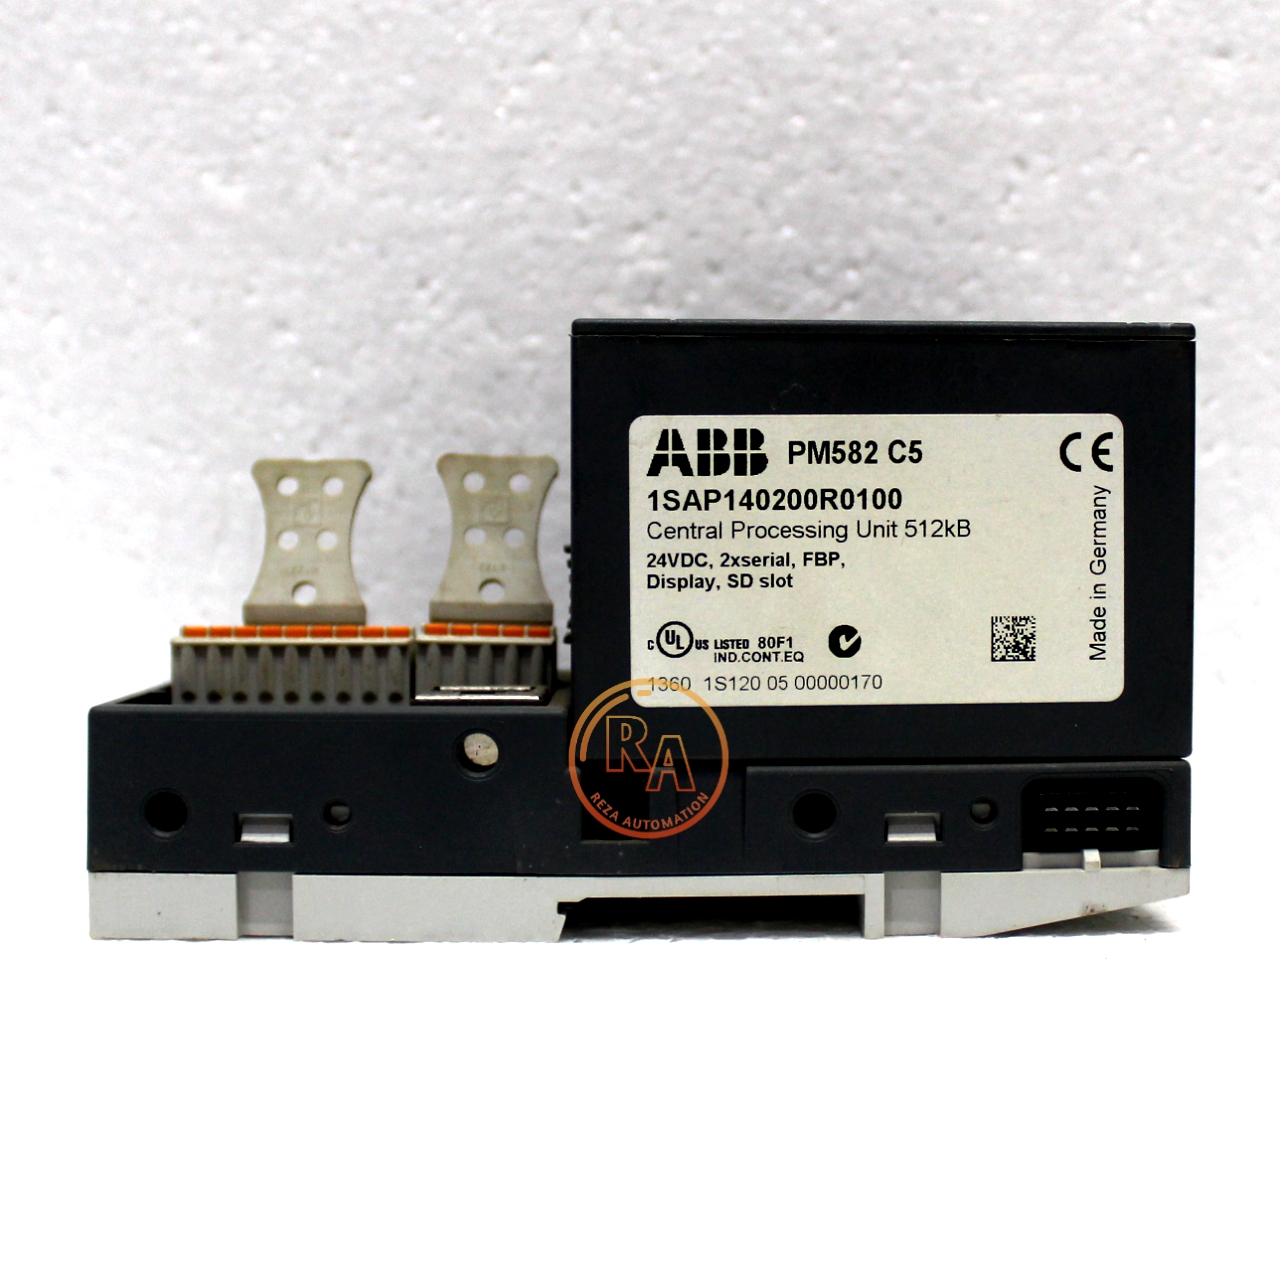 ABB PM582 AC500, Programmable Logic Controller